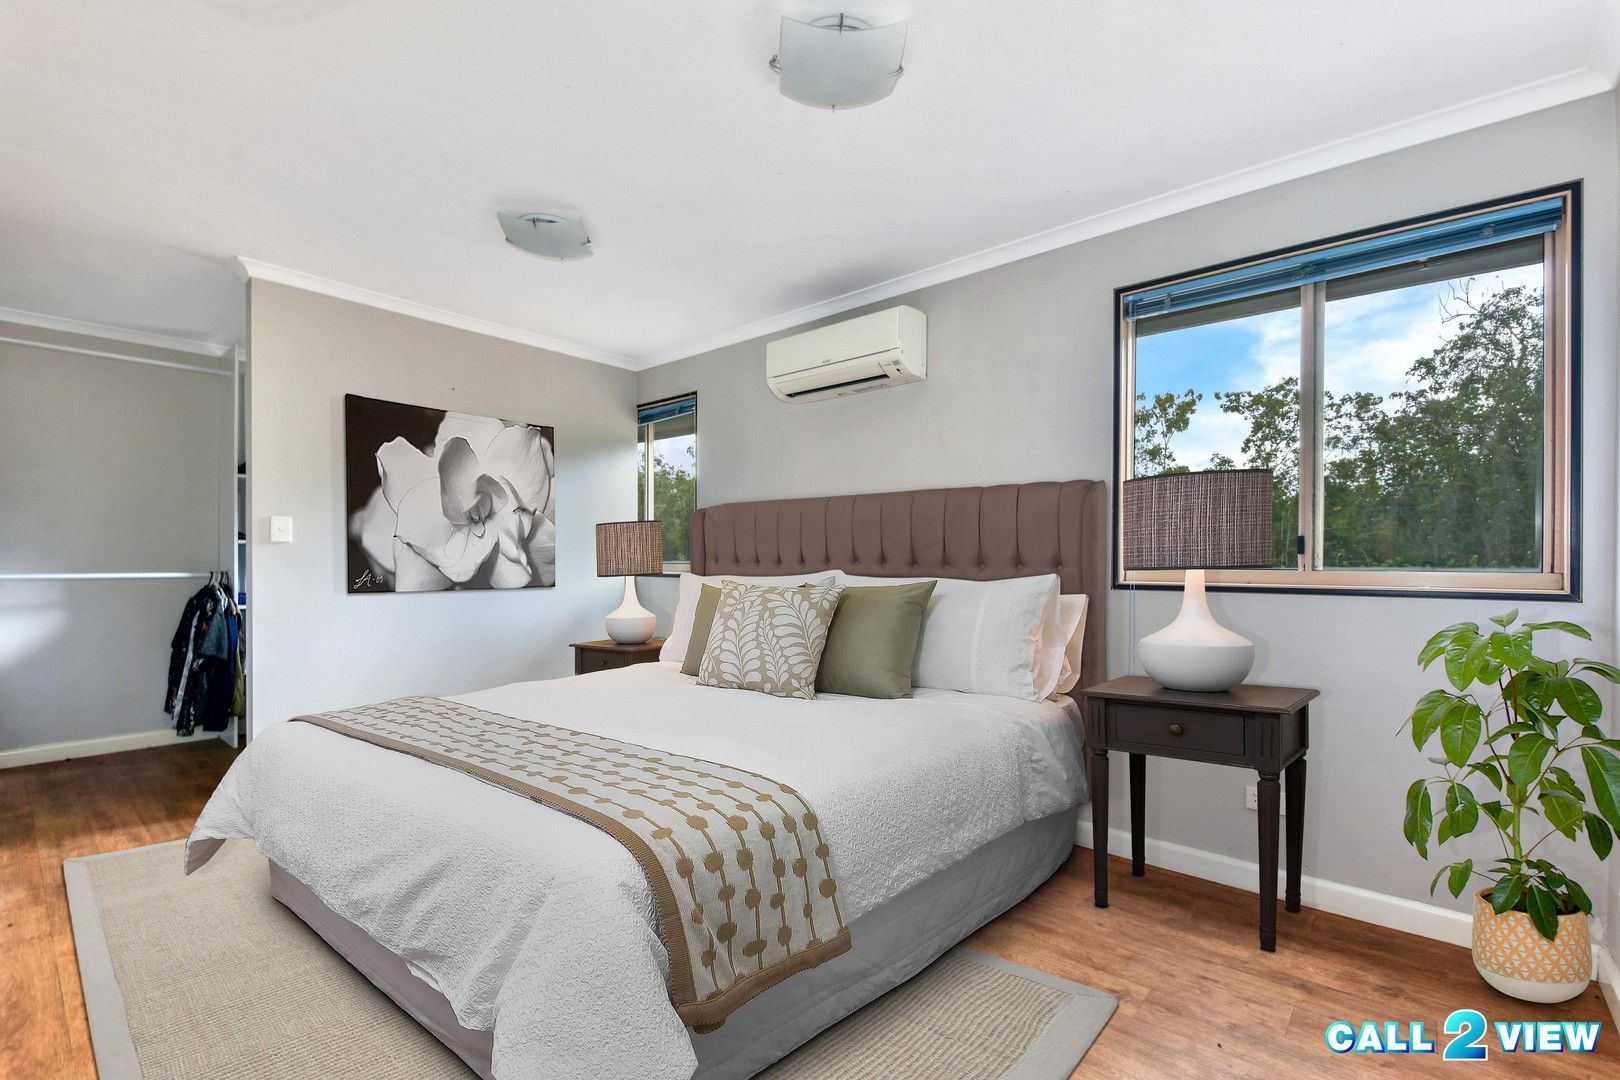 3 bedrooms Acreage / Semi-Rural in 620 Redcliffe Road NOONAMAH NT, 0837